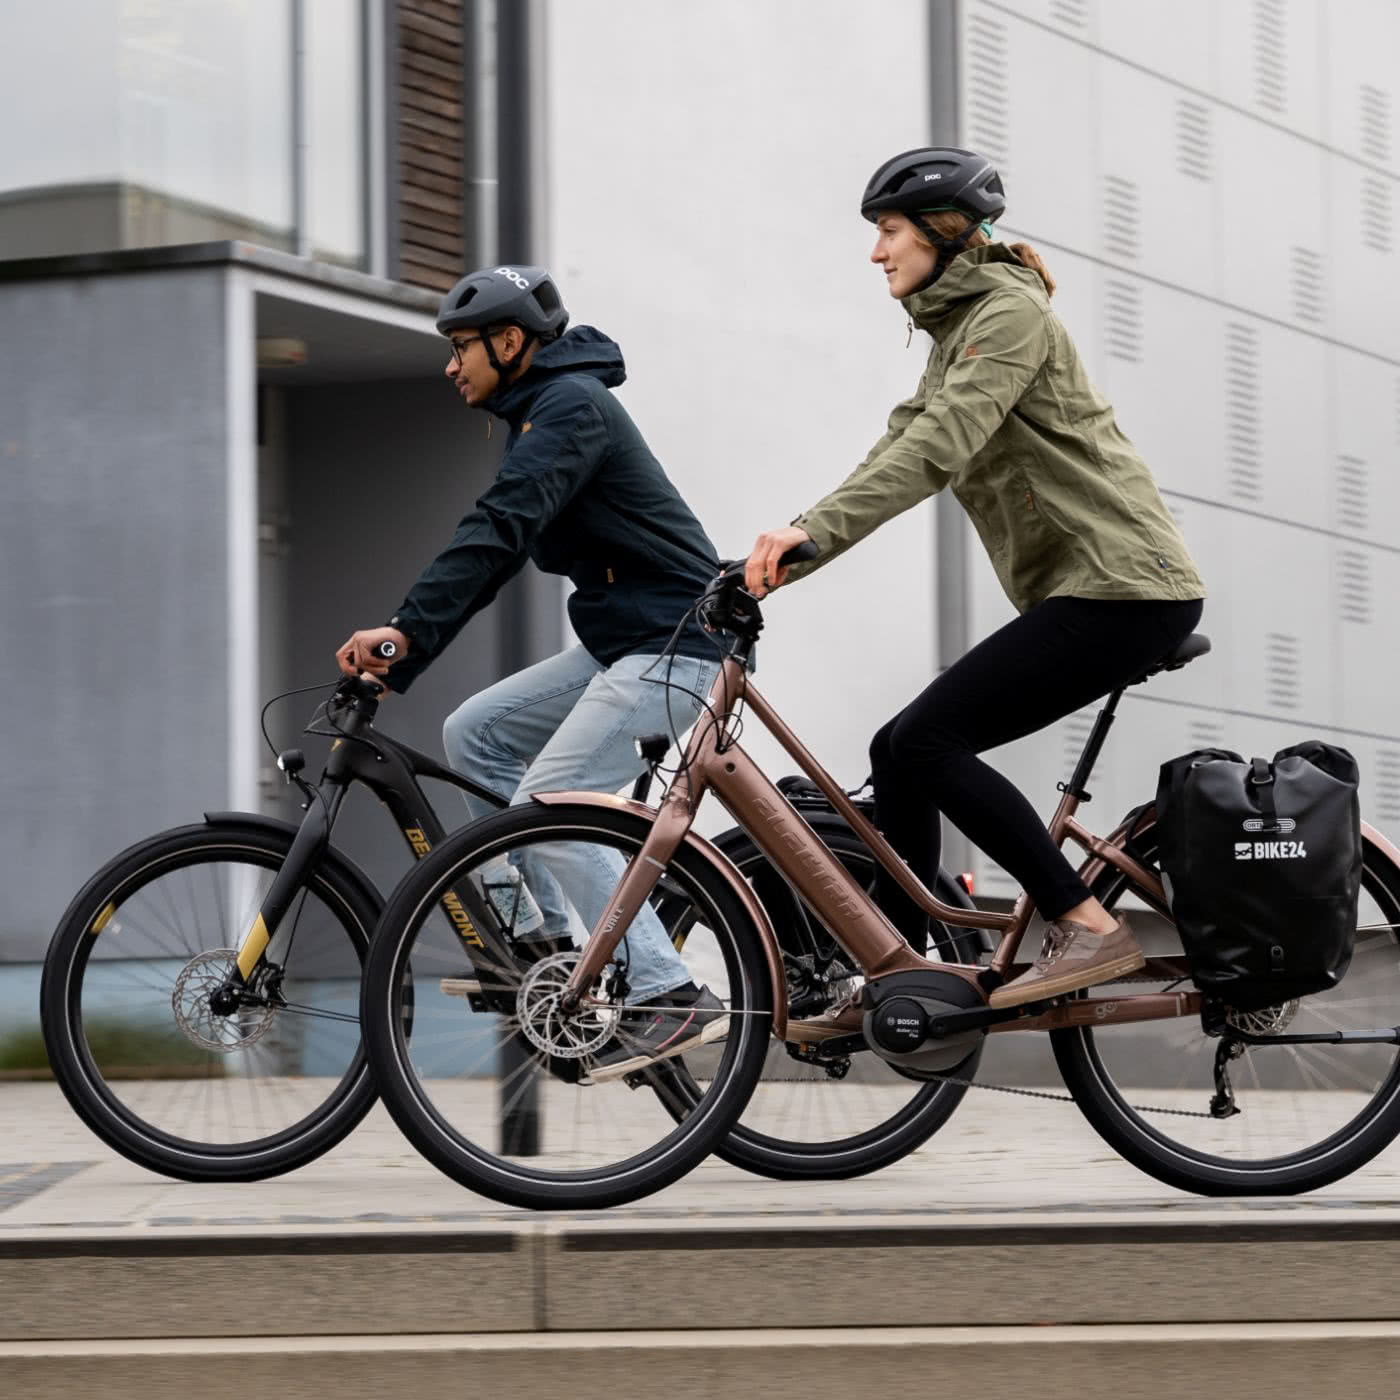 Man and woman on e-city bikes